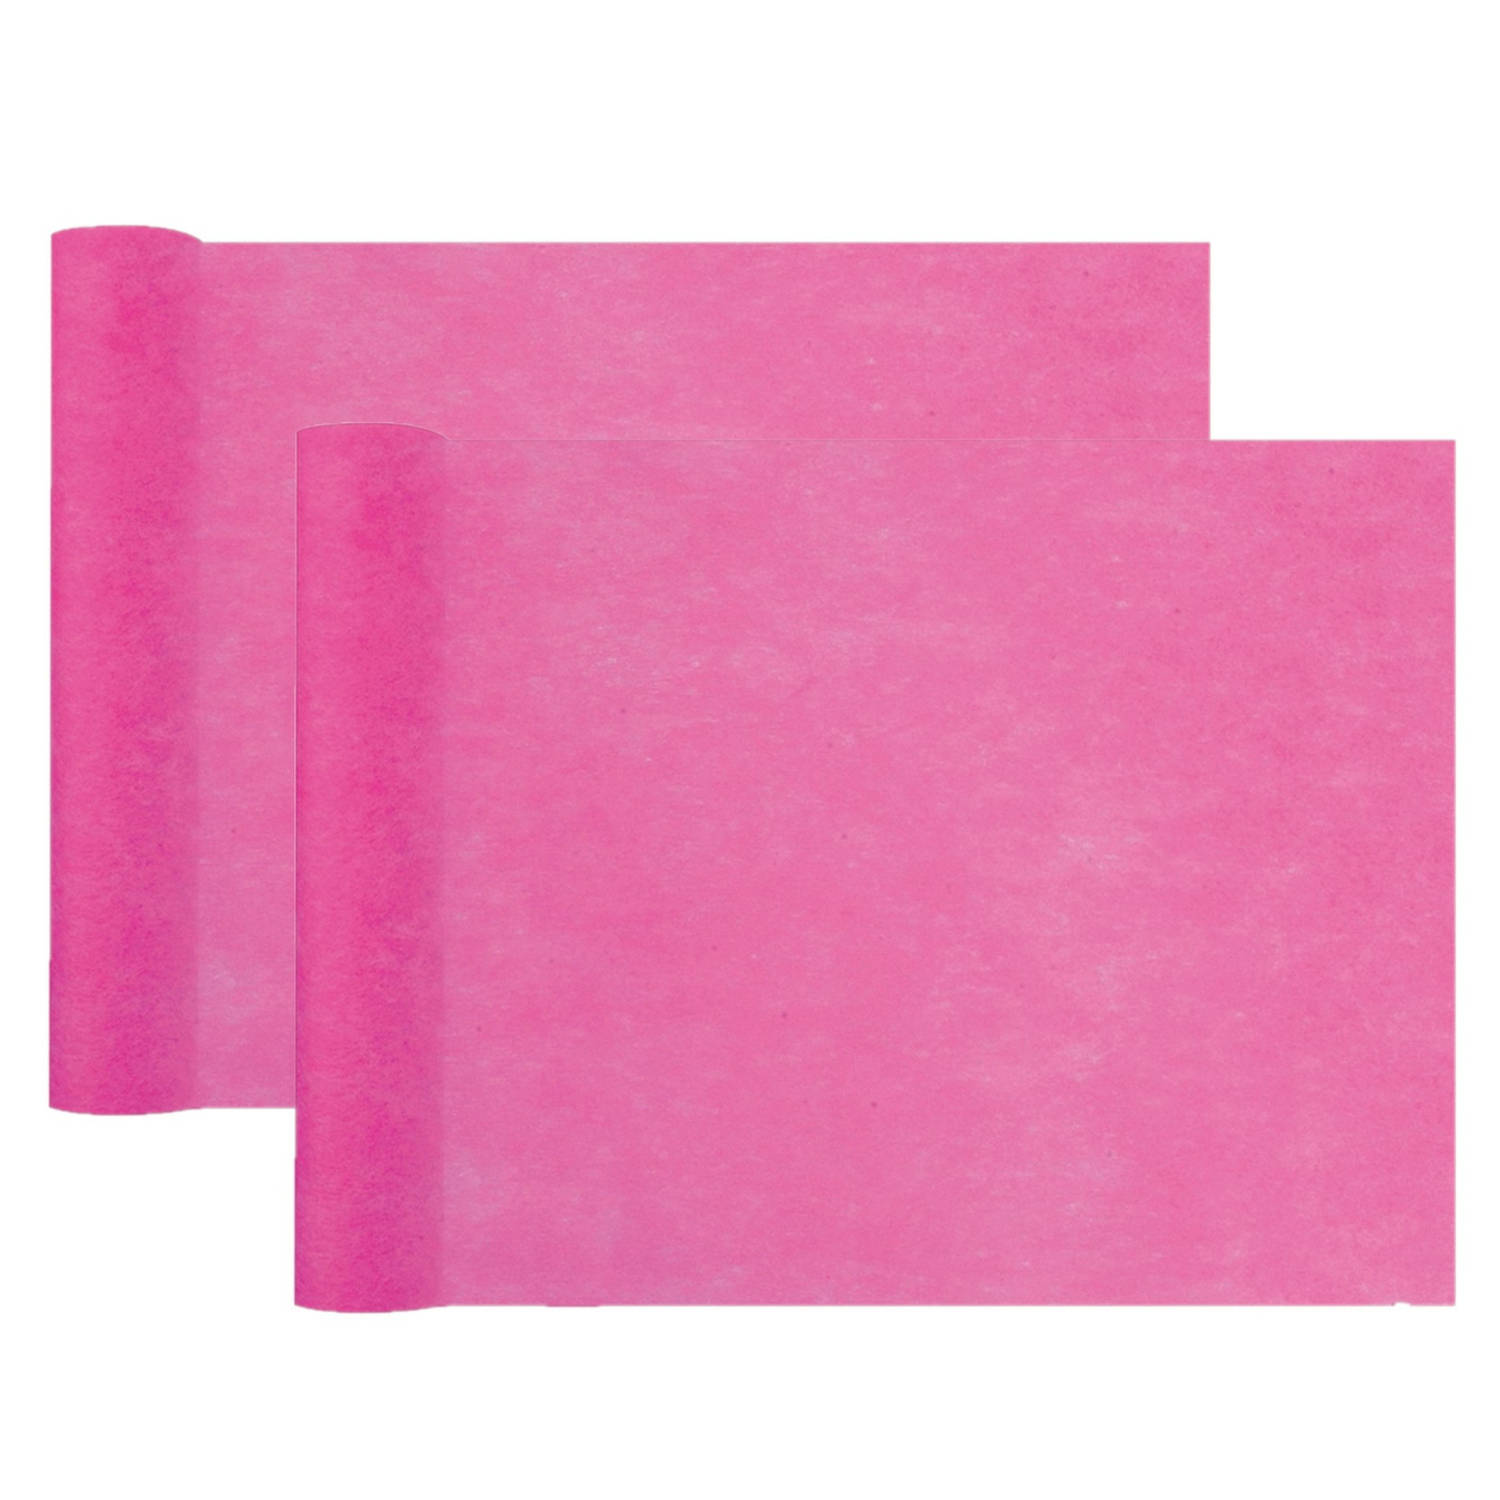 Aanmoediging Grens B.C. Tafelloper op rol - 2x - fuchsia roze - 30 cm x 10 m - non woven polyester  - Feesttafelkleden | Blokker